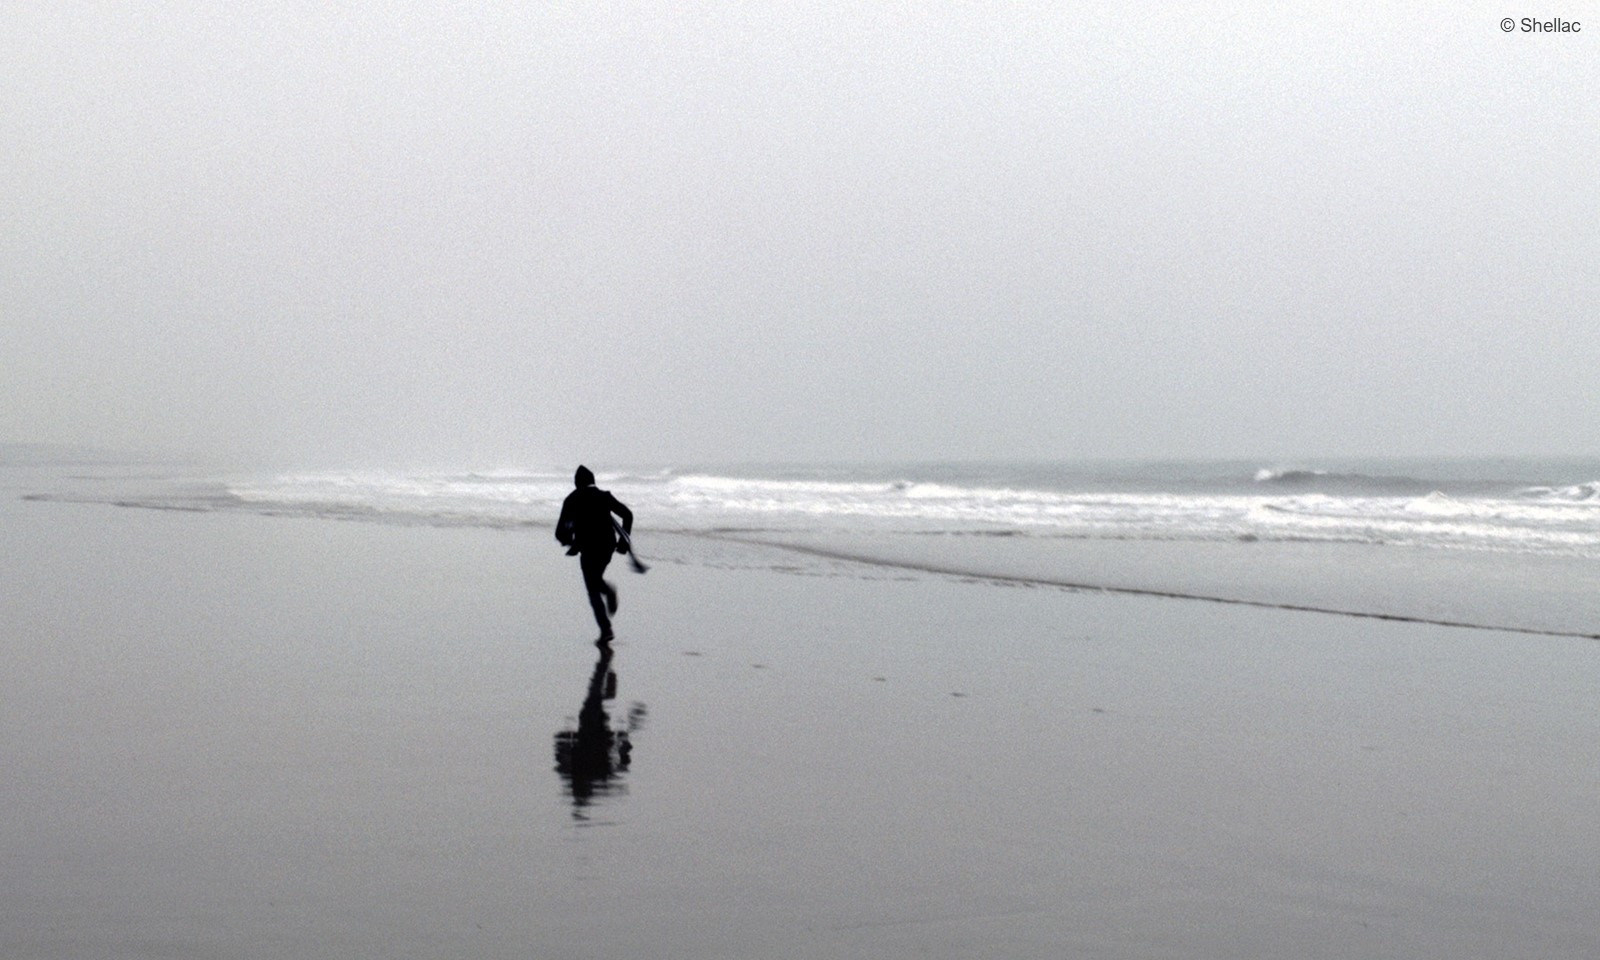 Ein Mann rennt am Strand entlang. Filmstill aus "Wohin, Flüchtling?" (c) Shellac